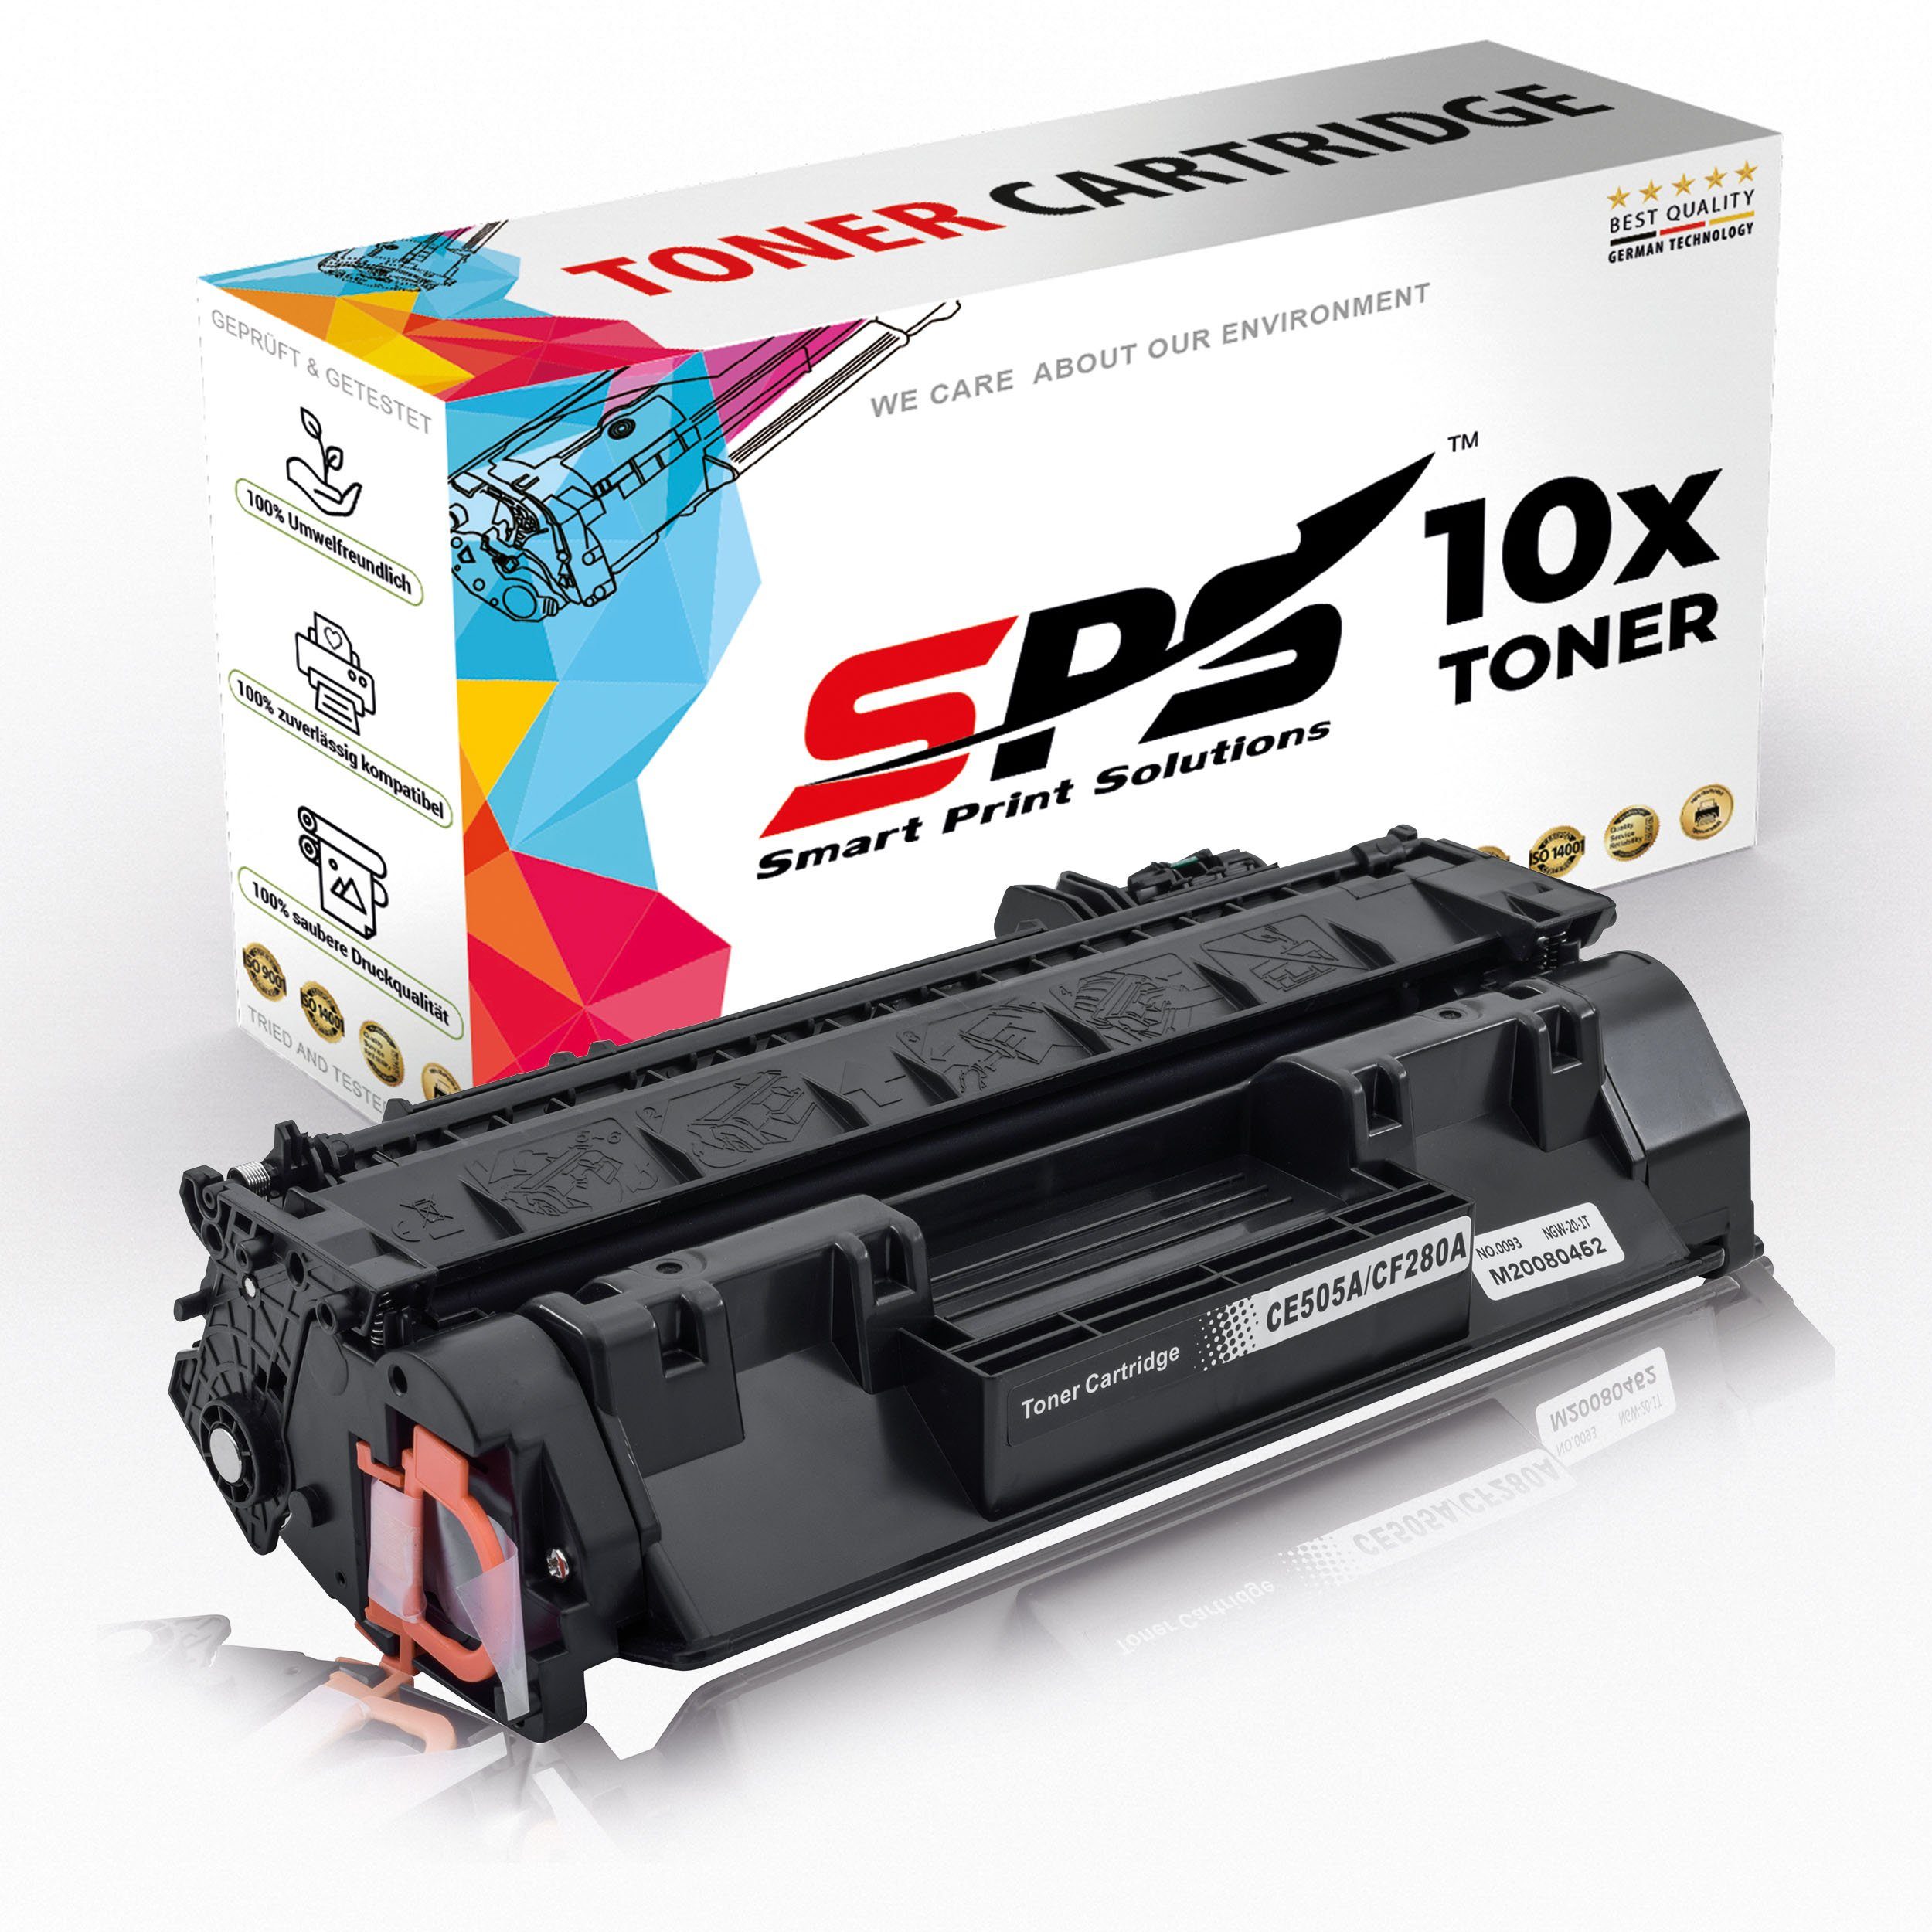 SPS Tonerkartusche Kompatibel für HP Laserjet Pro 400 M401 80A CF280A, (10er Pack) | Tonerpatronen